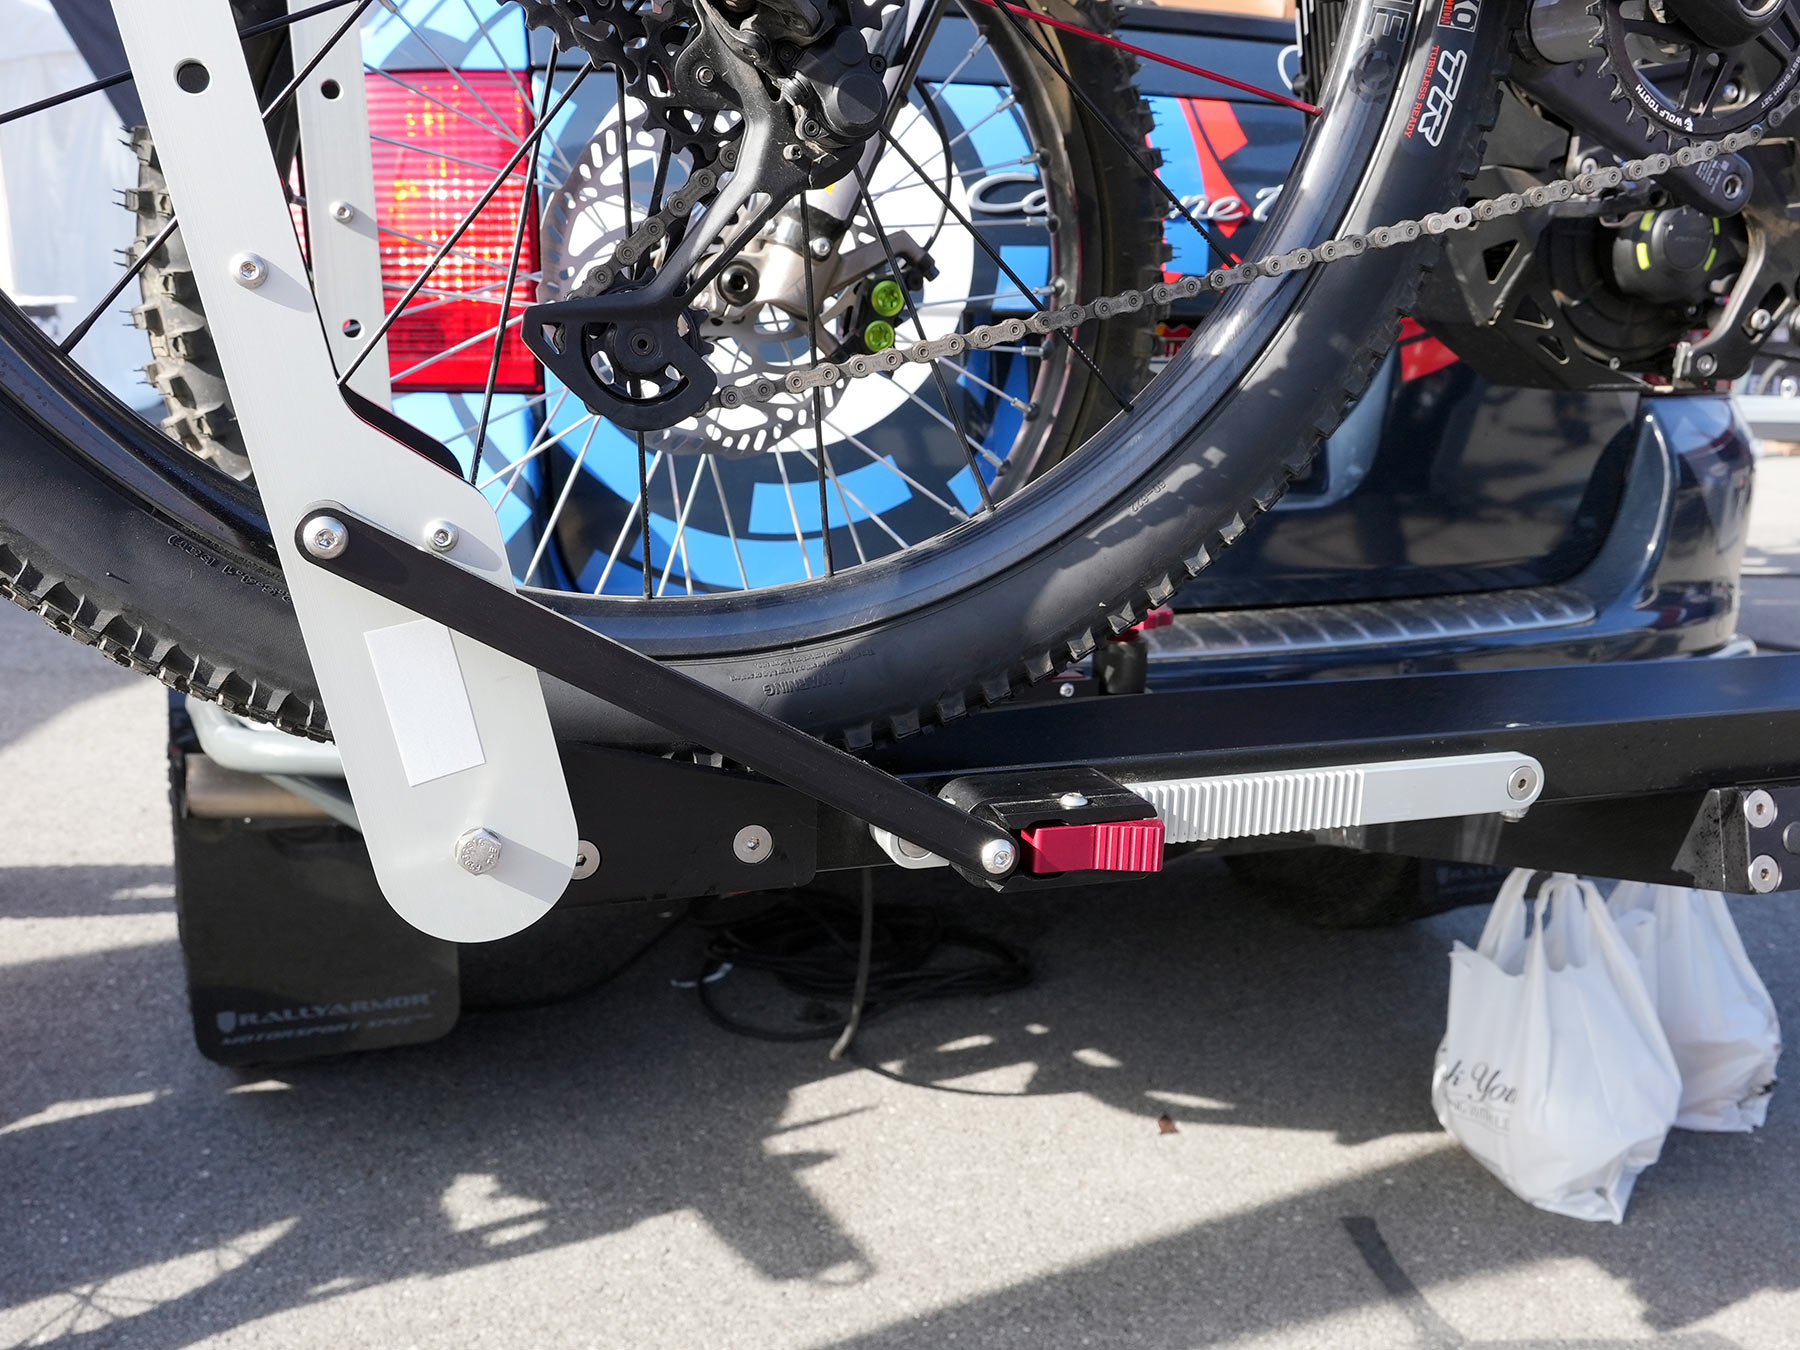 1up racks xd extreme duty heavy duty hitch mount 自行車架適用於較重的電動自行車